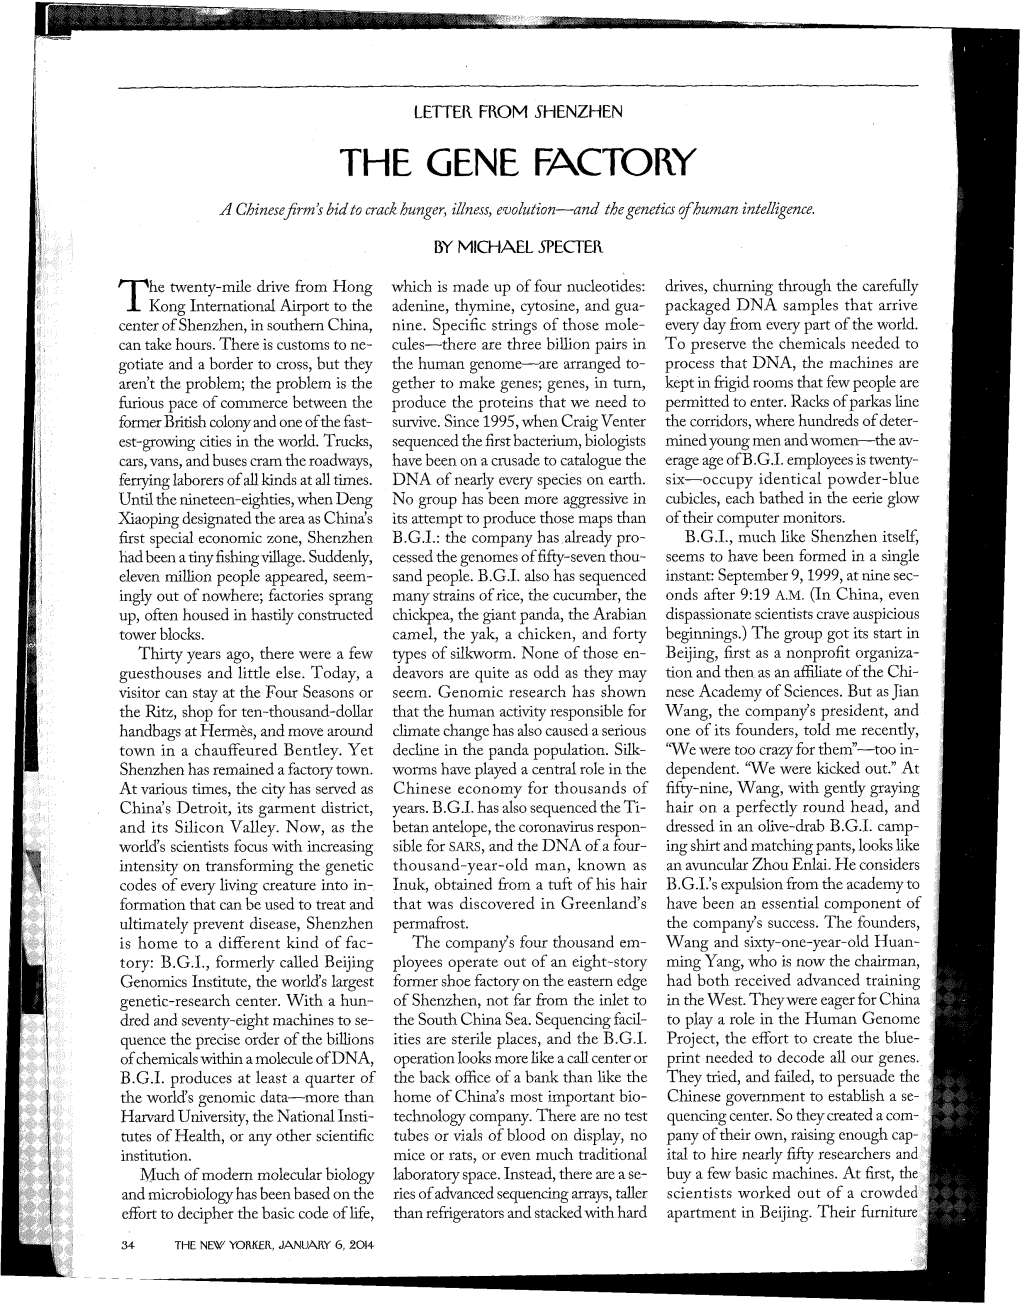 The Gene Factory